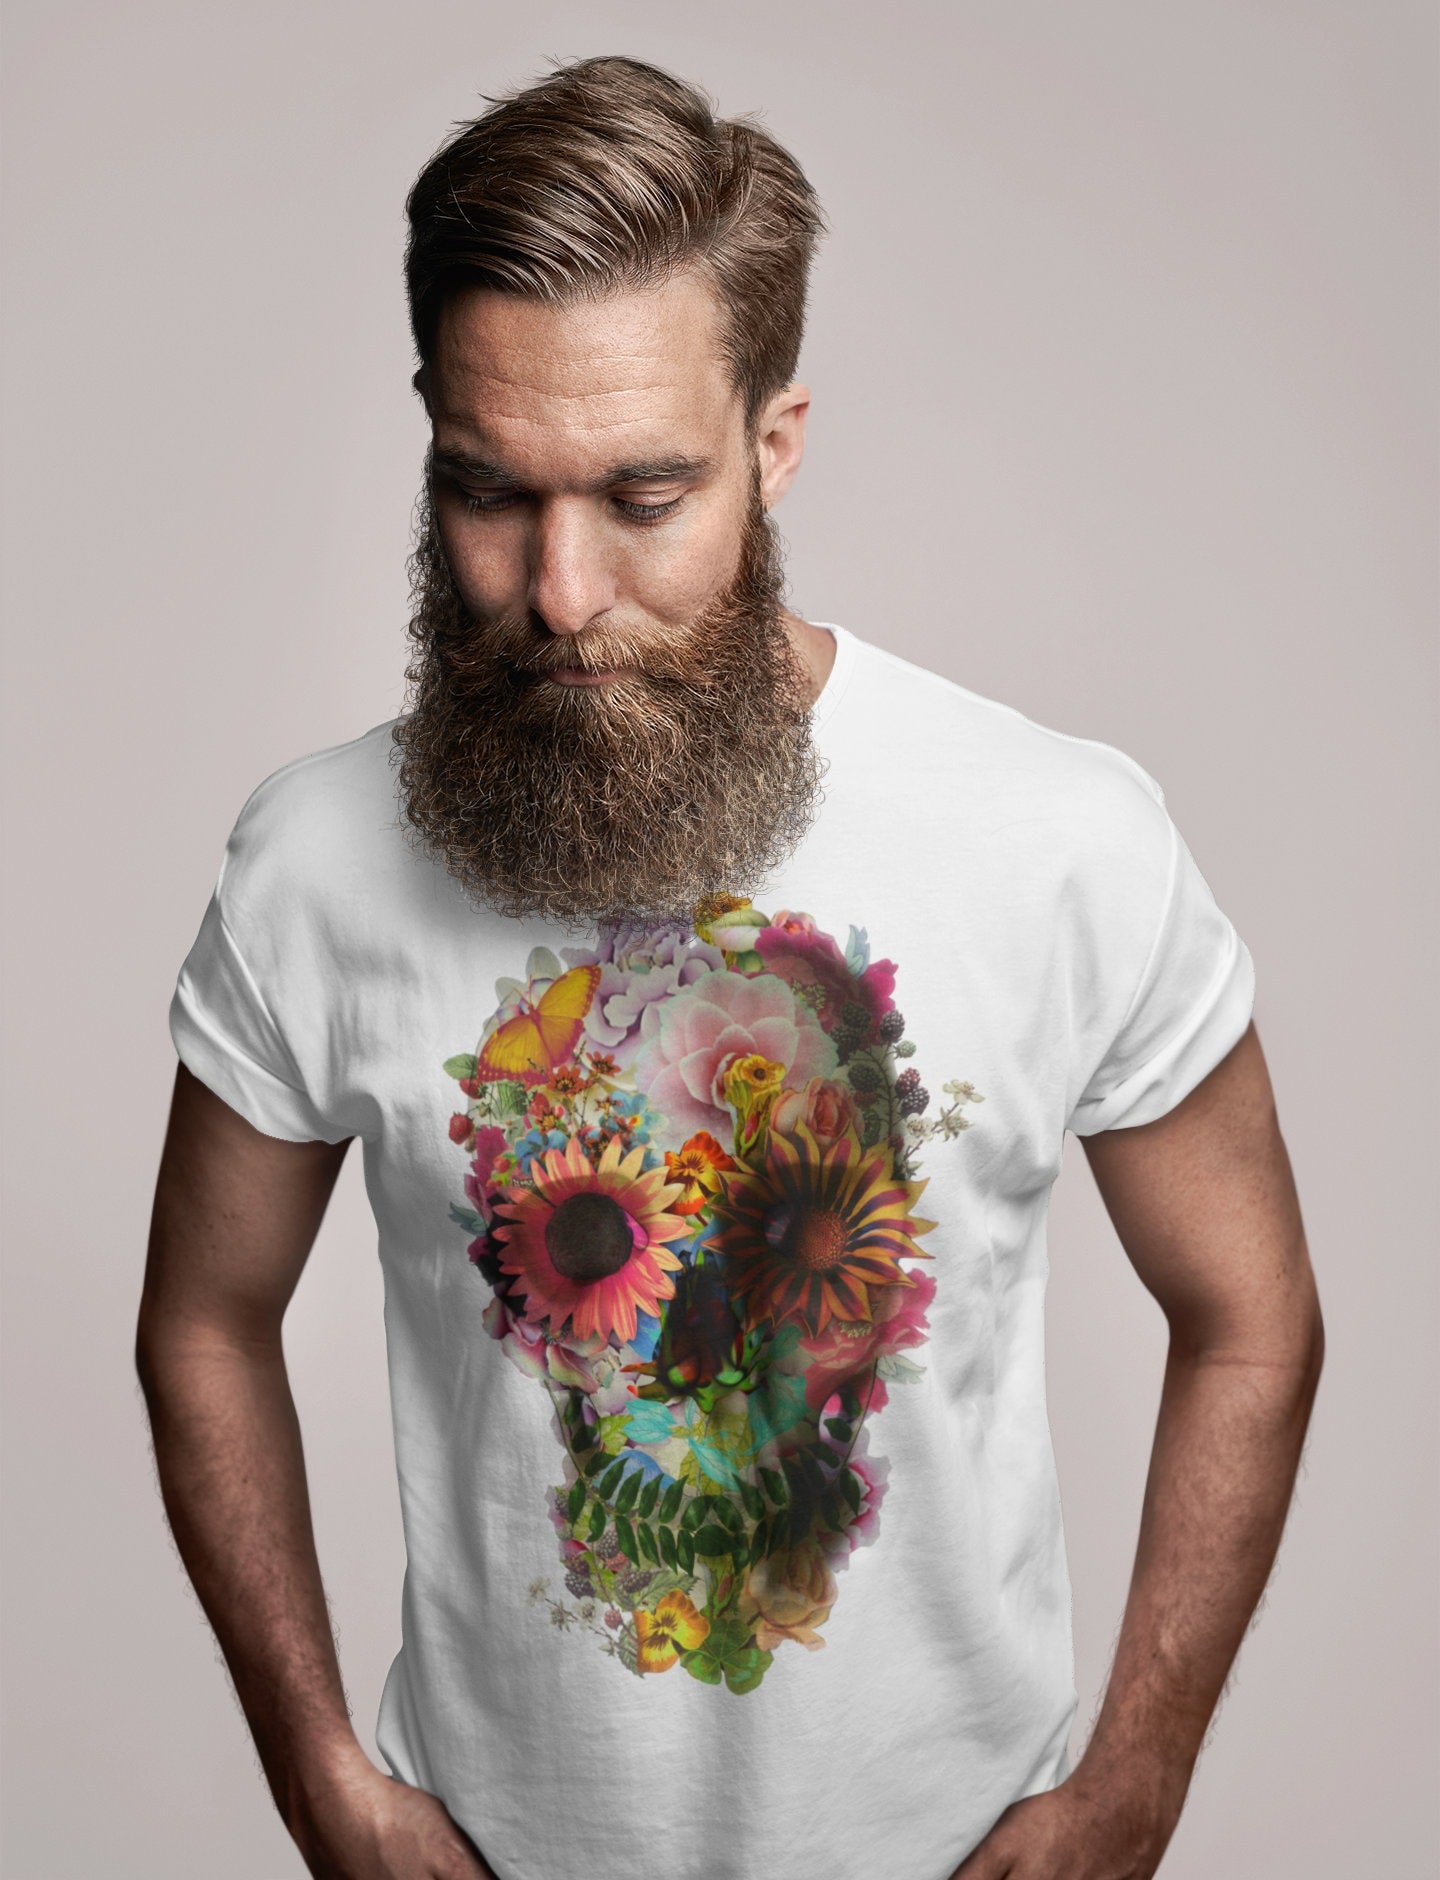 Floral Skull Men's T-shirt, Skull Art Print T shirt, Skull Gift For Him, Boho Sugar Skull Illustration Graphic Tee